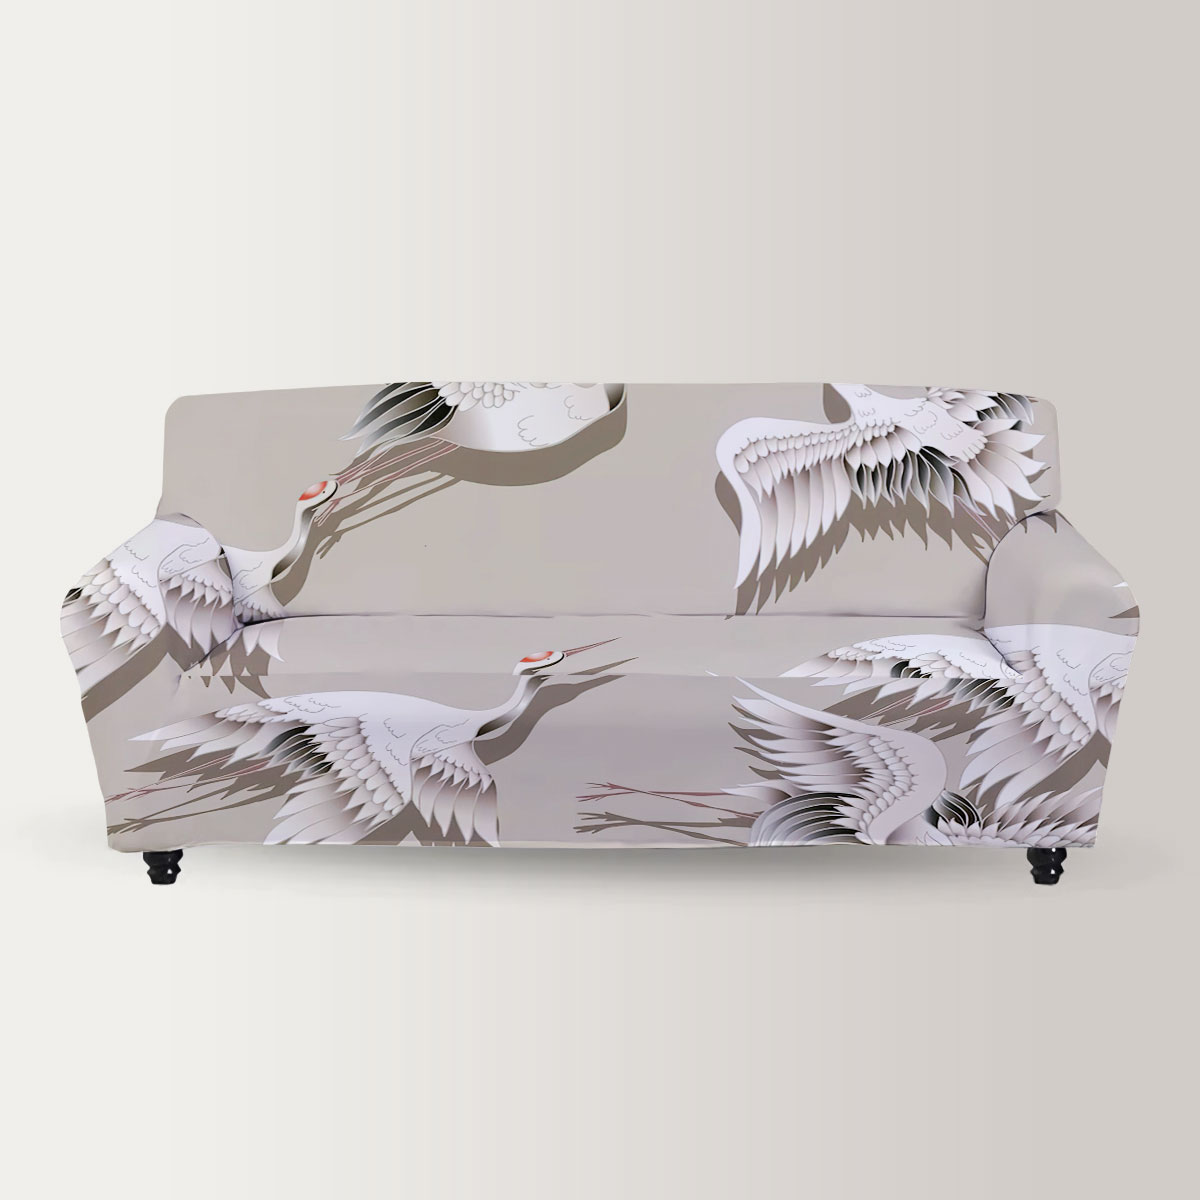 Japanese Heron Brown Backgorund Sofa Cover